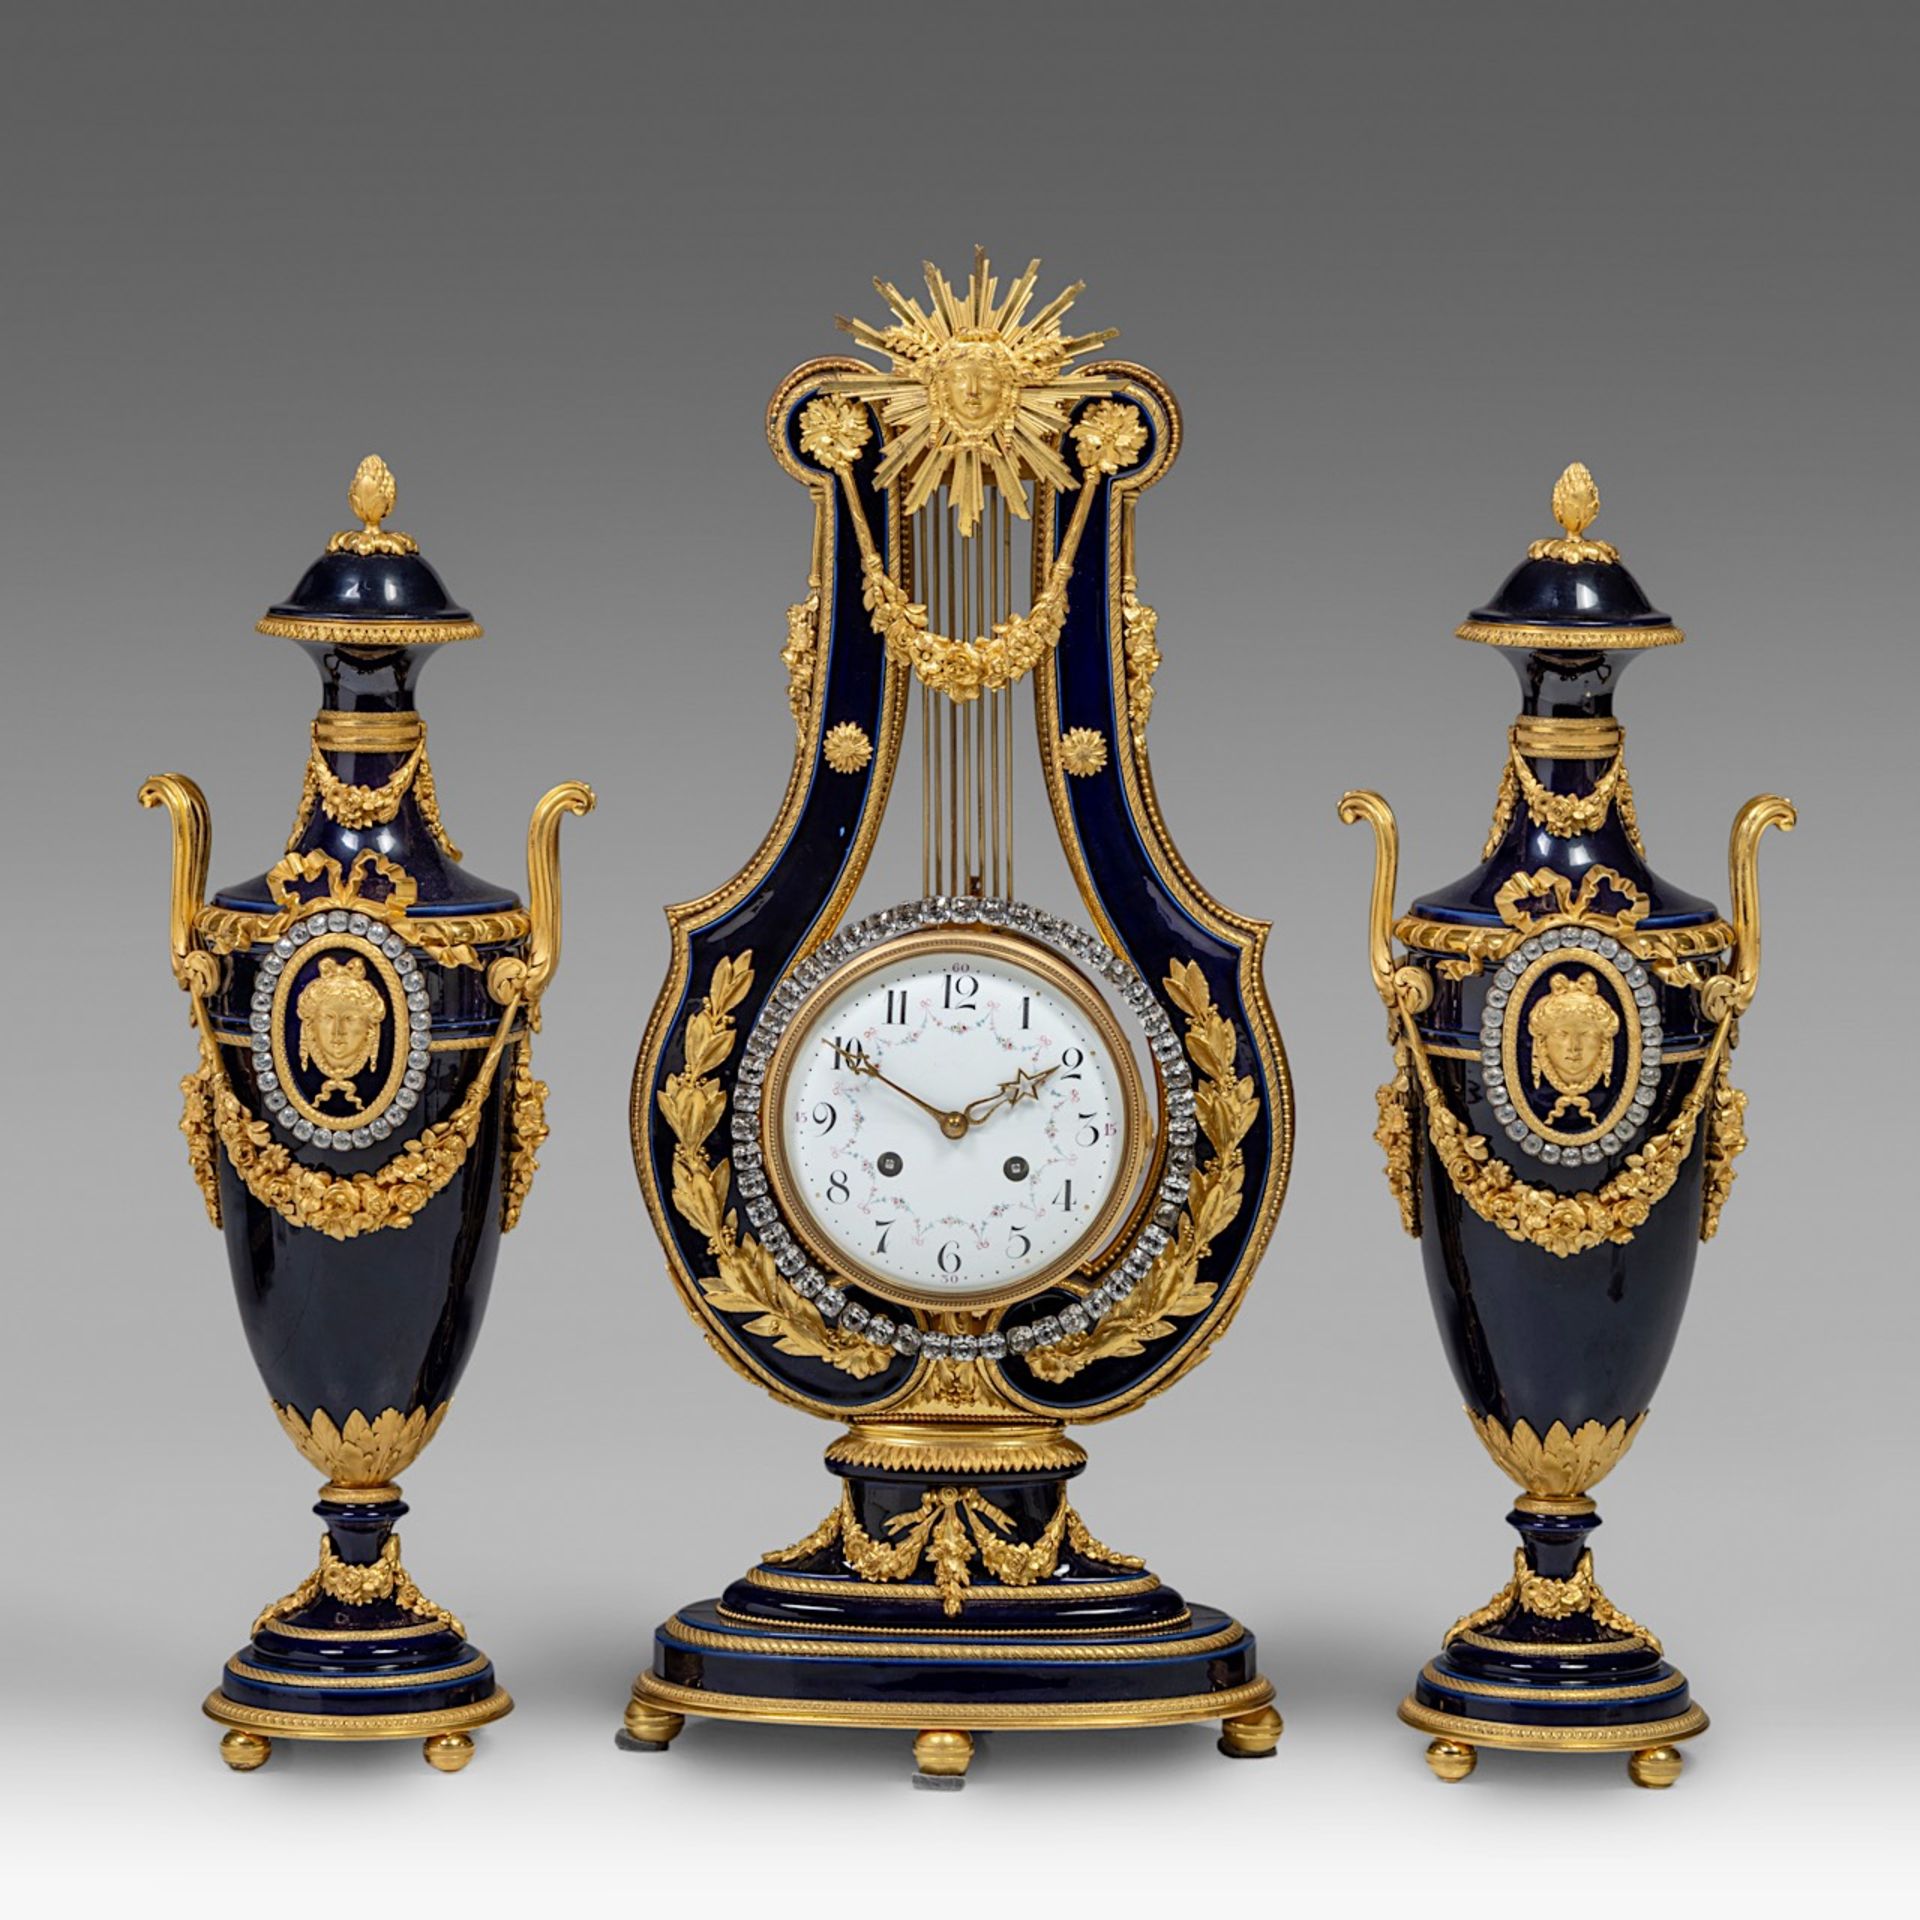 A fine Neoclassical three-piece cobalt blue porcelain and gilt bronze mounted clock set, H 55 - 65 c